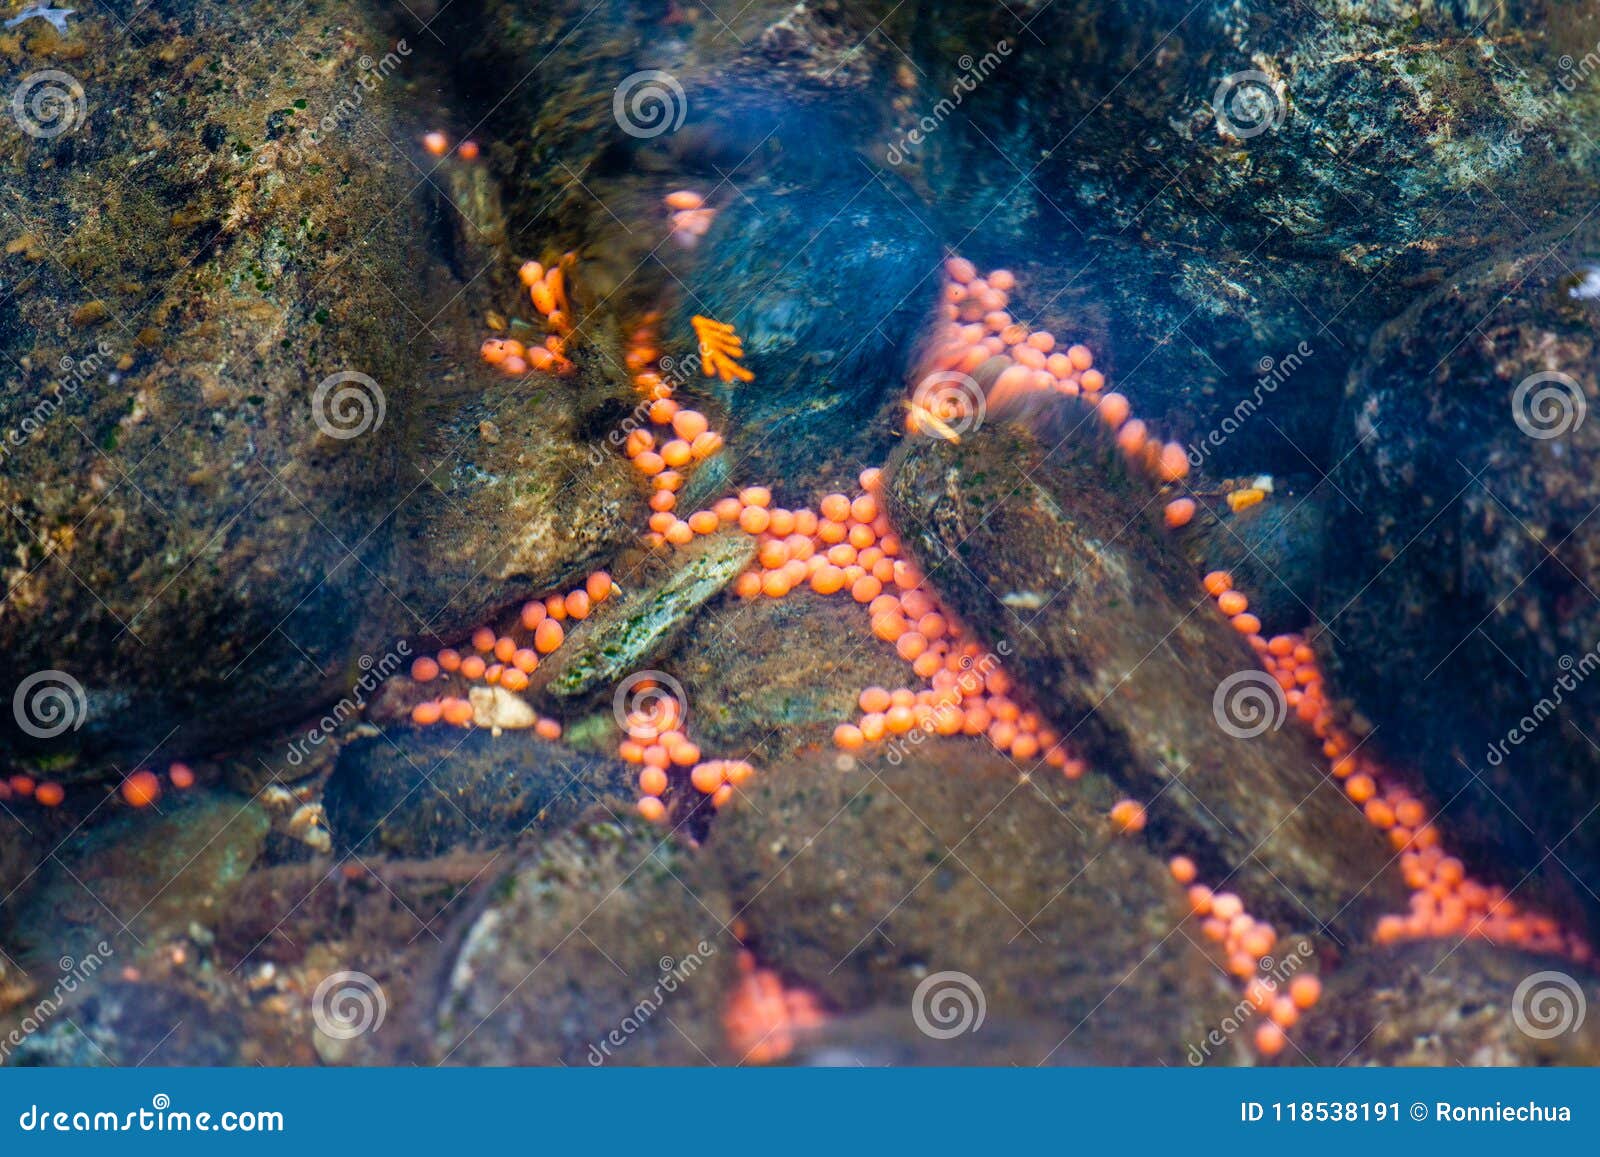 Salmon Eggs in the Adams River, BC, Canada Stock Image - Image of sockeye,  river: 118538191